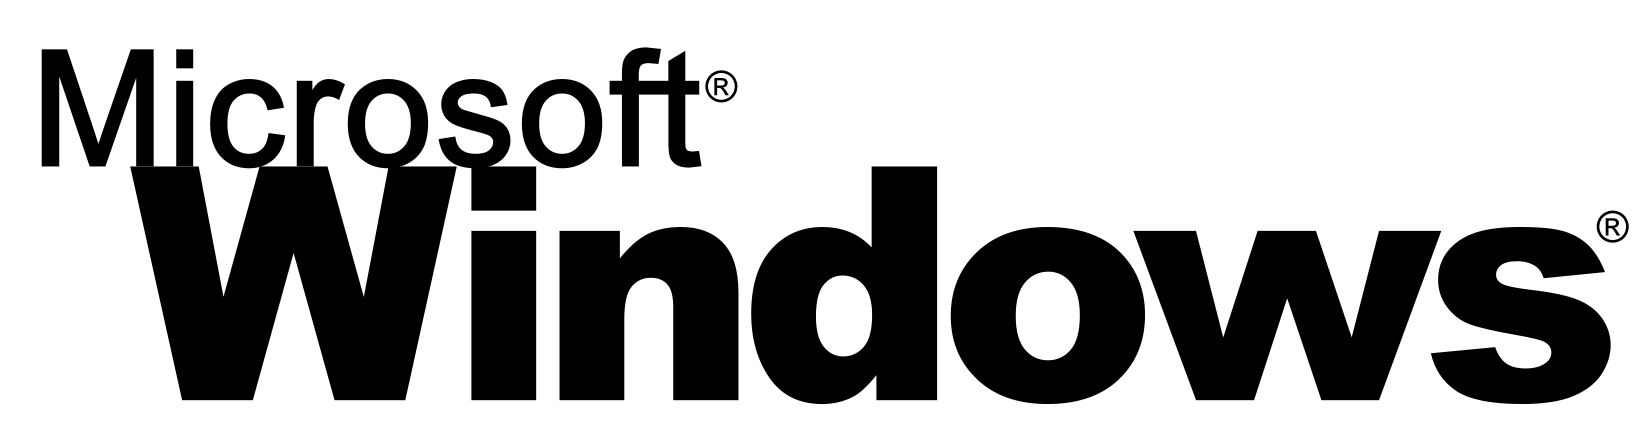 Windows 95 Logo - Image - 2000px-Windows 95 logo.svg.png | Logopedia | FANDOM powered ...